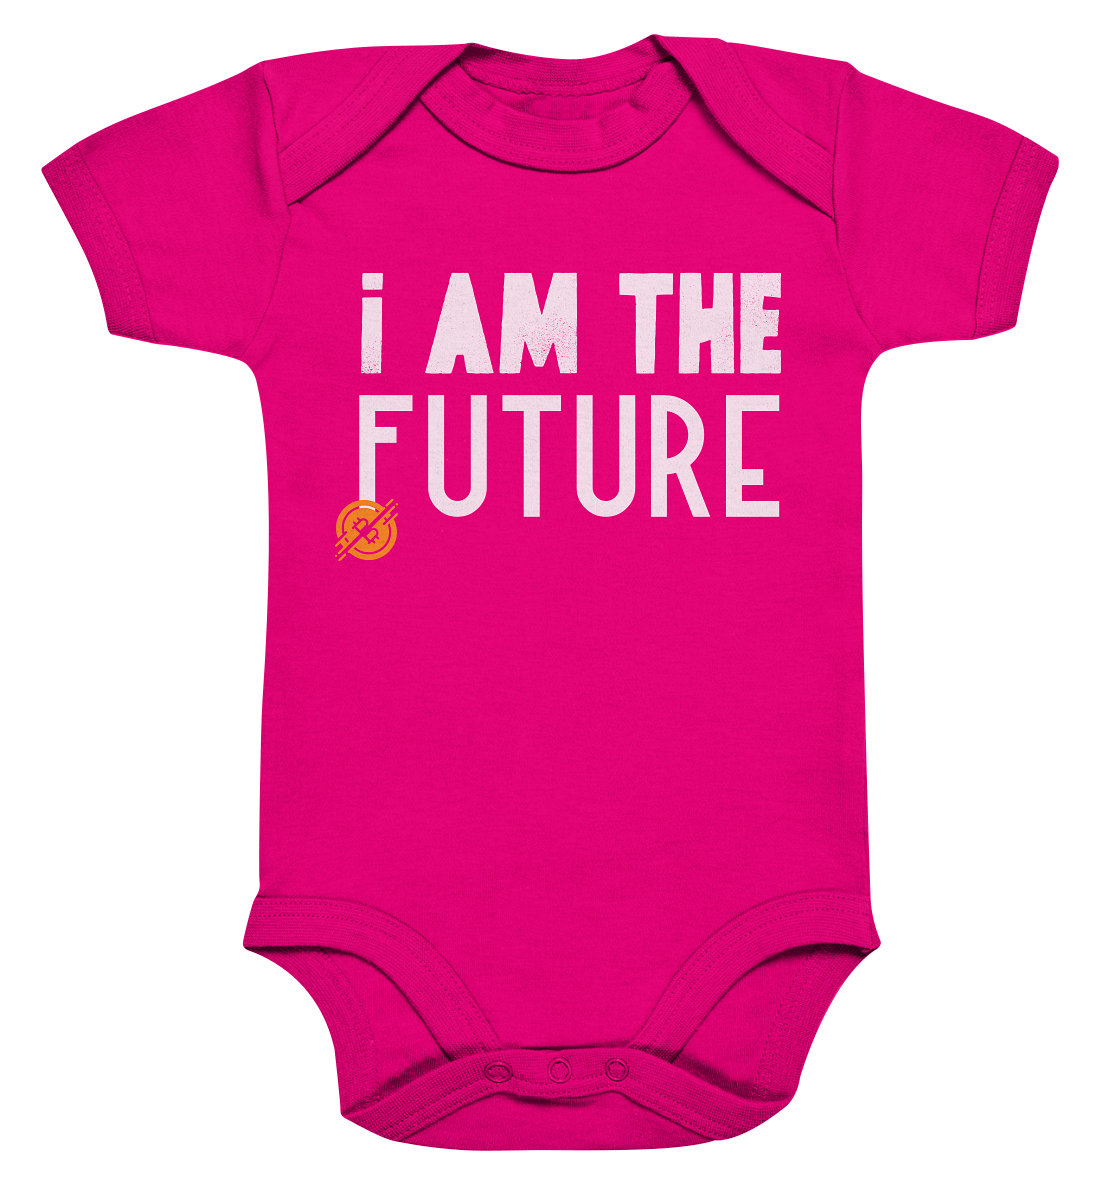 Bitcoin Baby-Body "I am the future" - Organic Baby Bodysuite